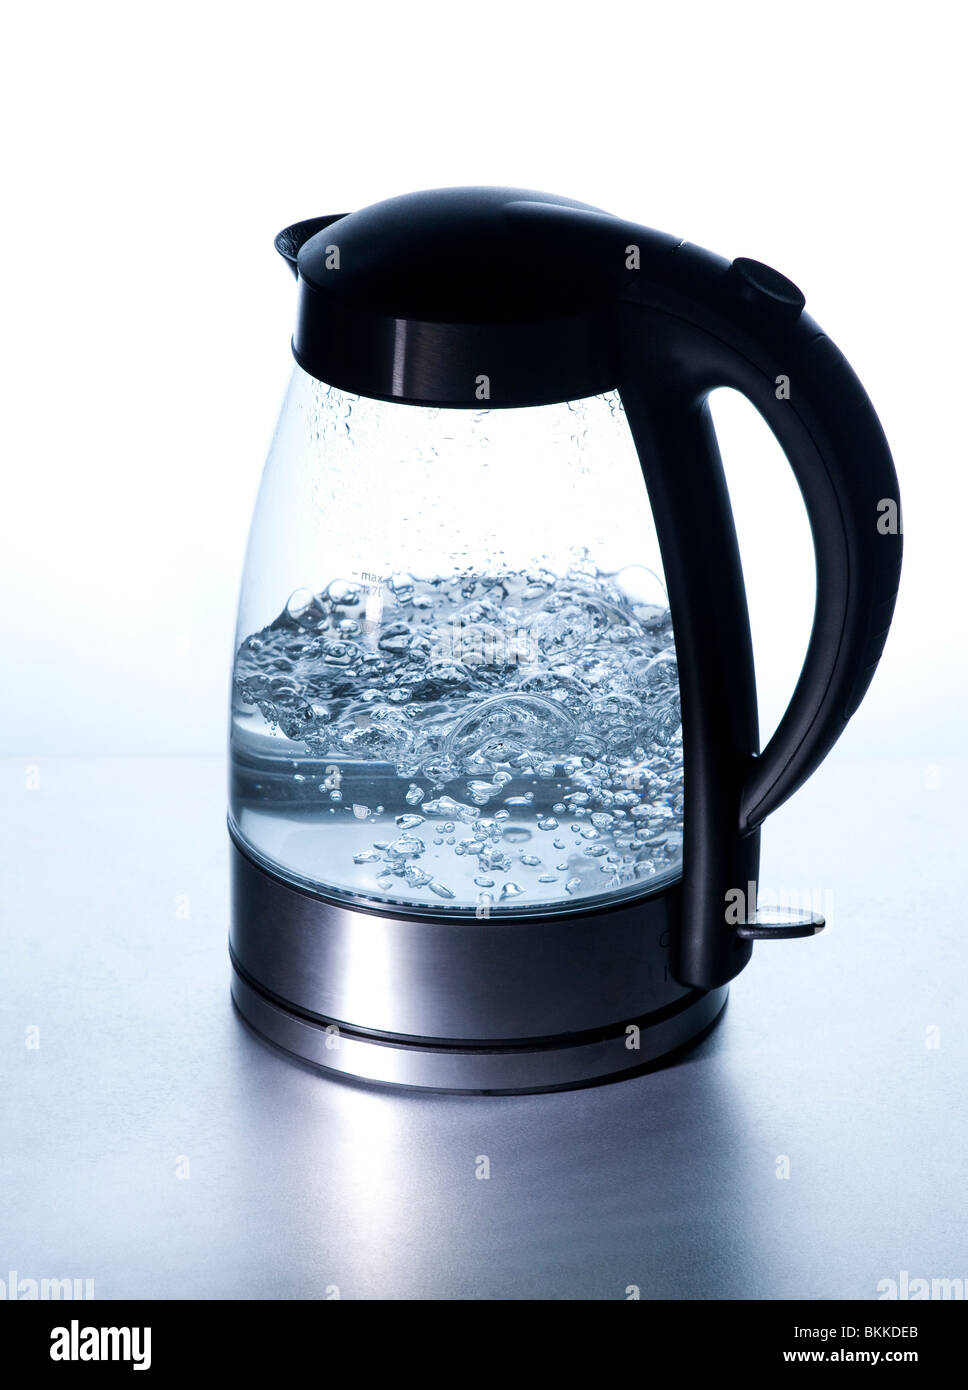 modern electric kettle boiling water using Schott Duran heatproof borosilicate glass Stock Photo